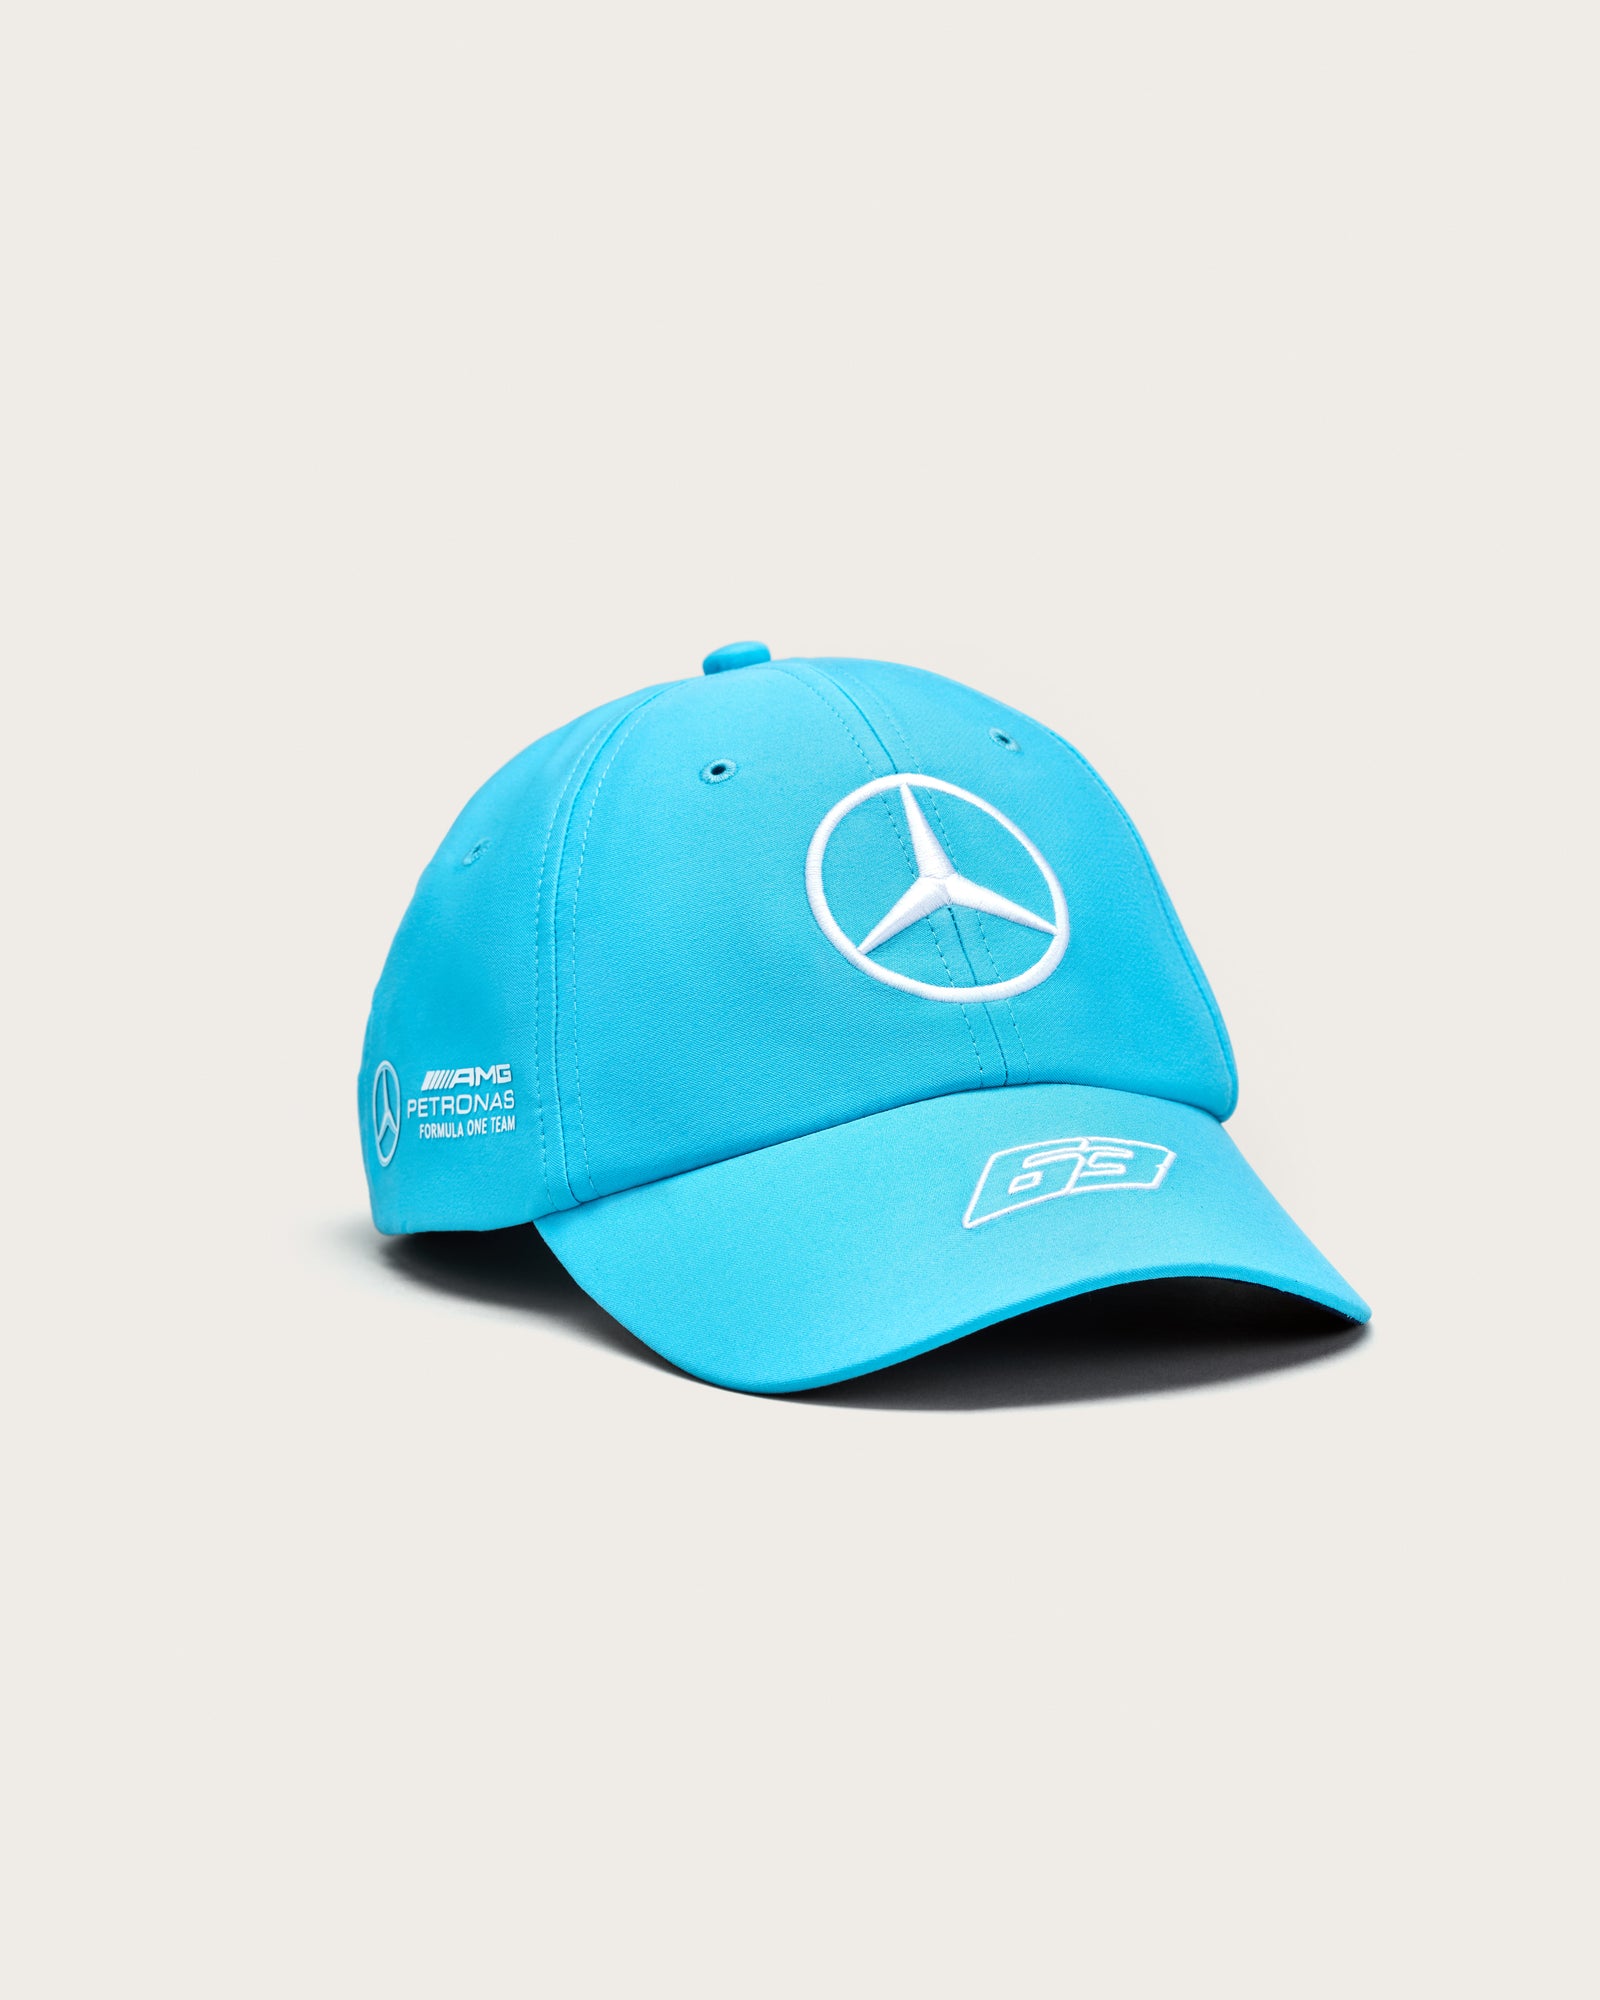 F1 | Mercedes Official Store Mercedes-AMG F1 Merchandise Team